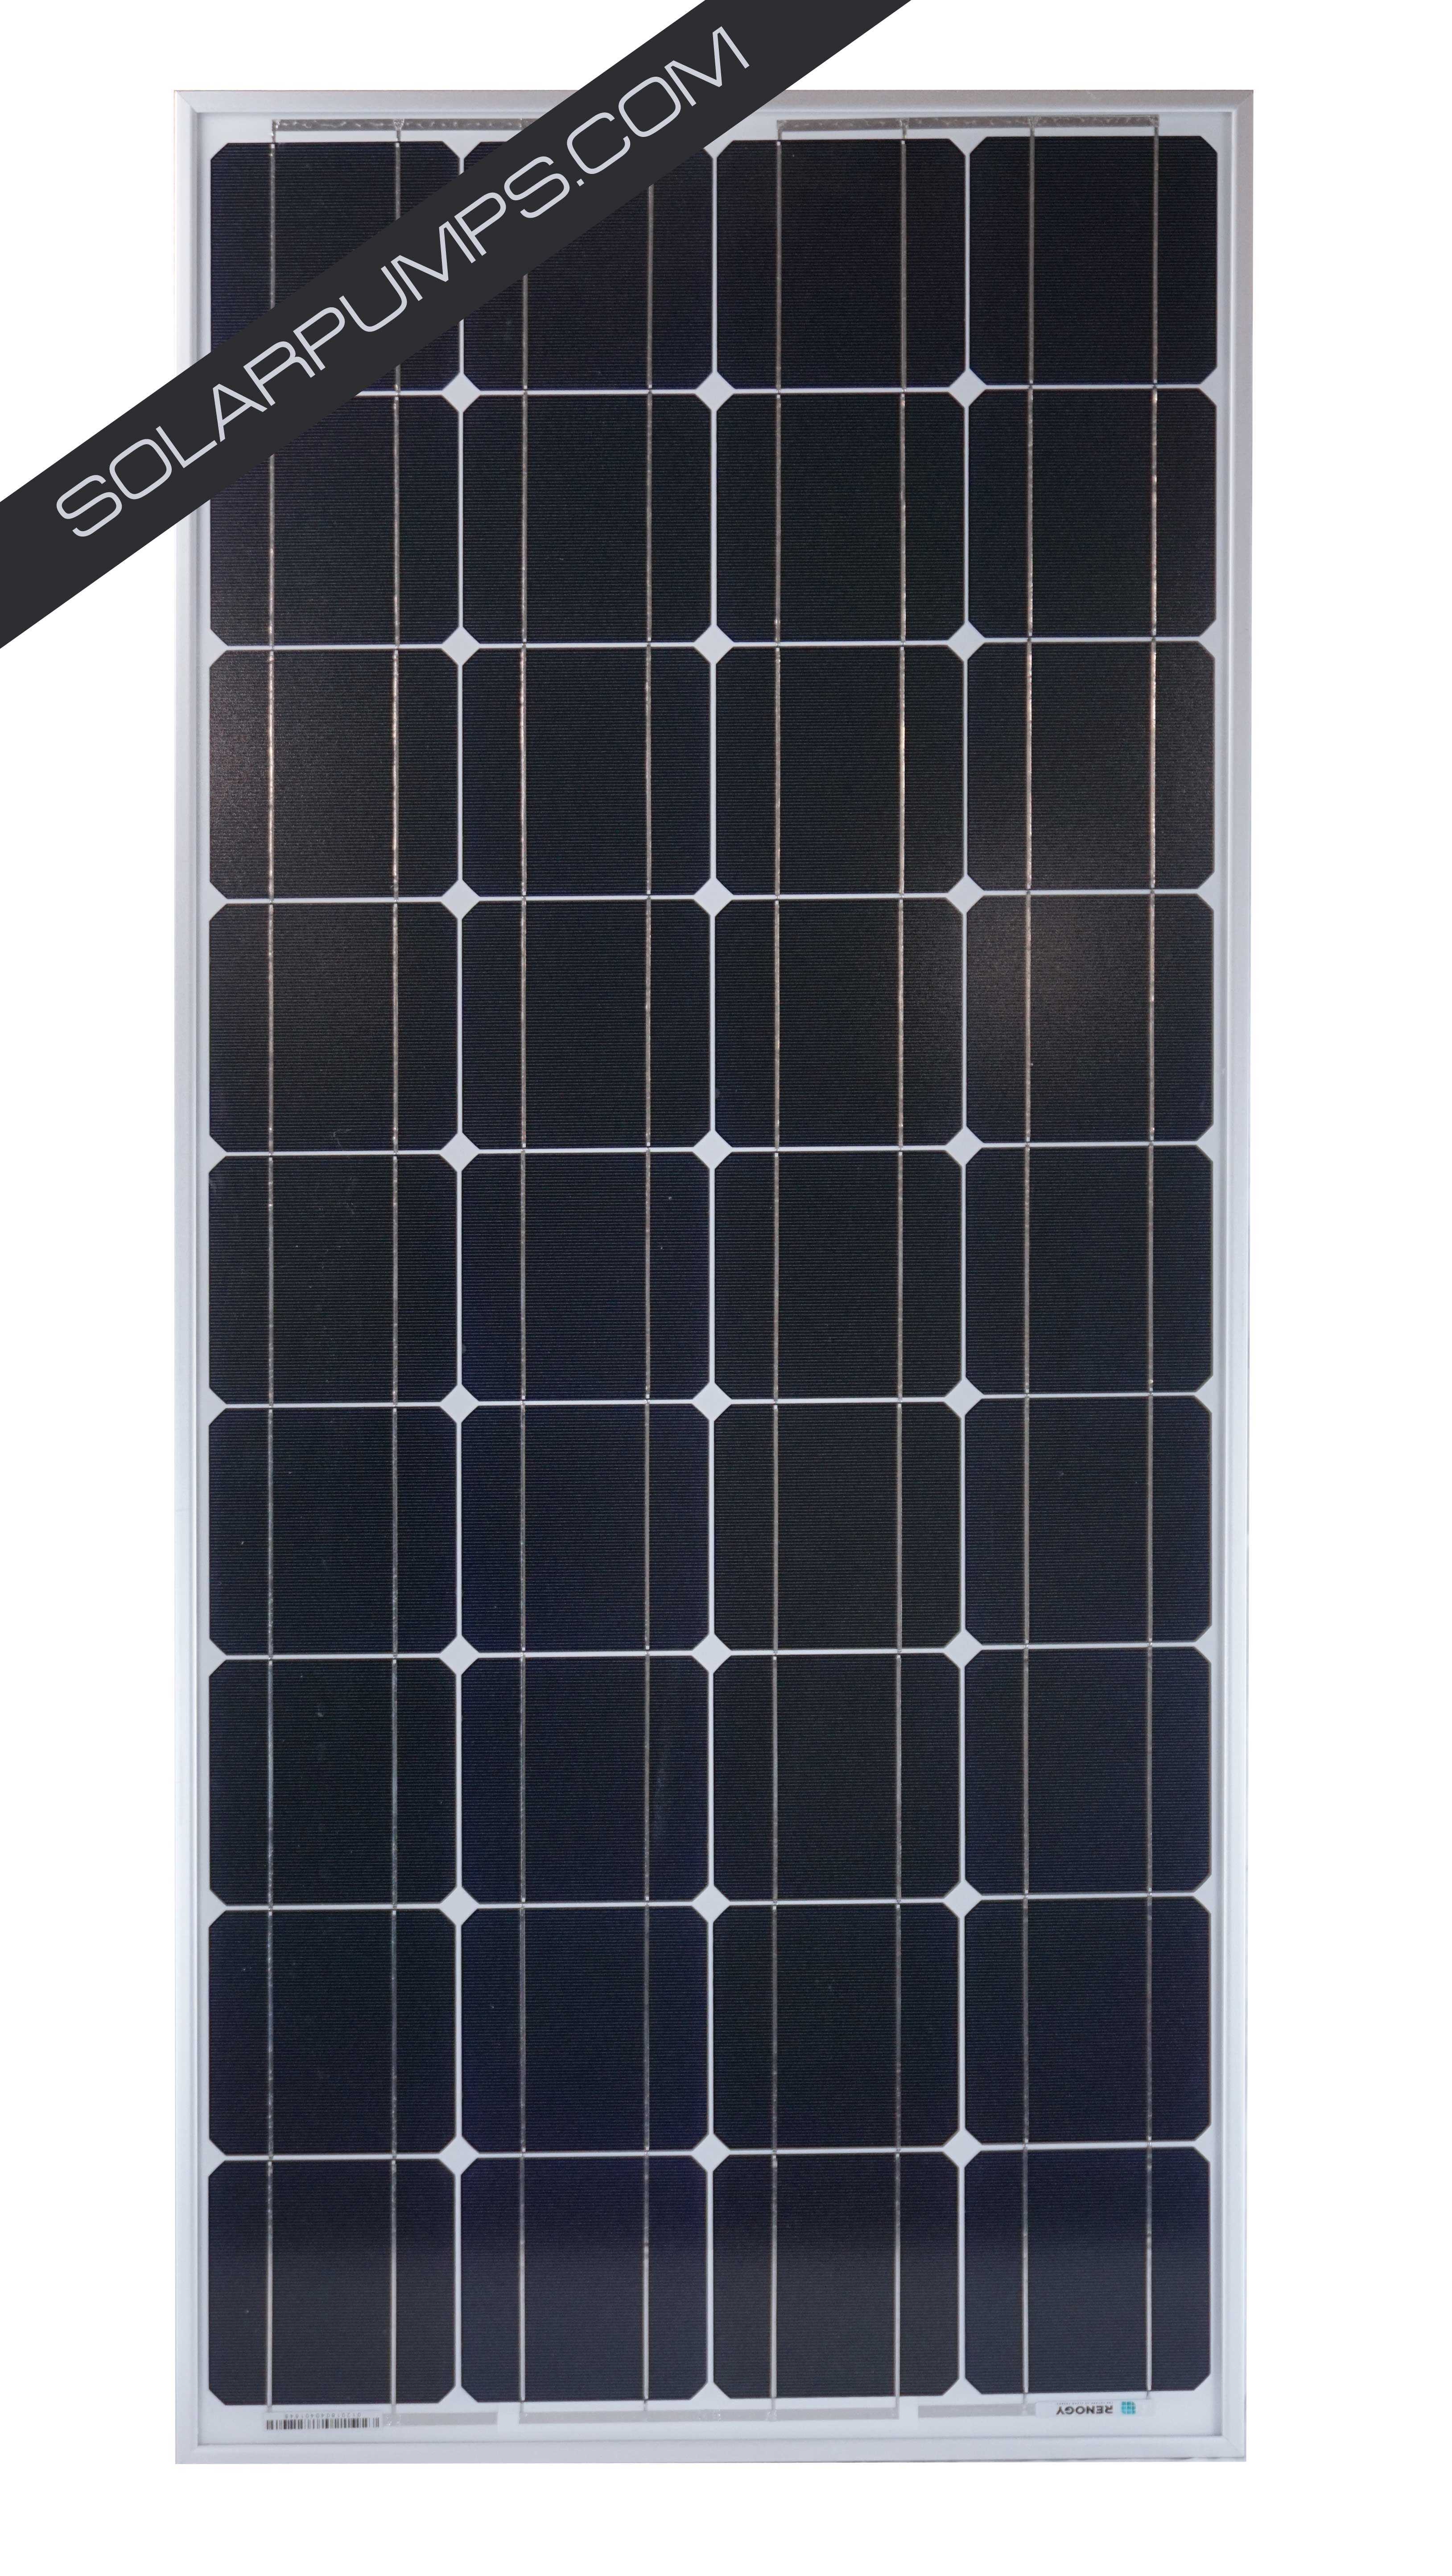 100W 18V Renogy Solar Array